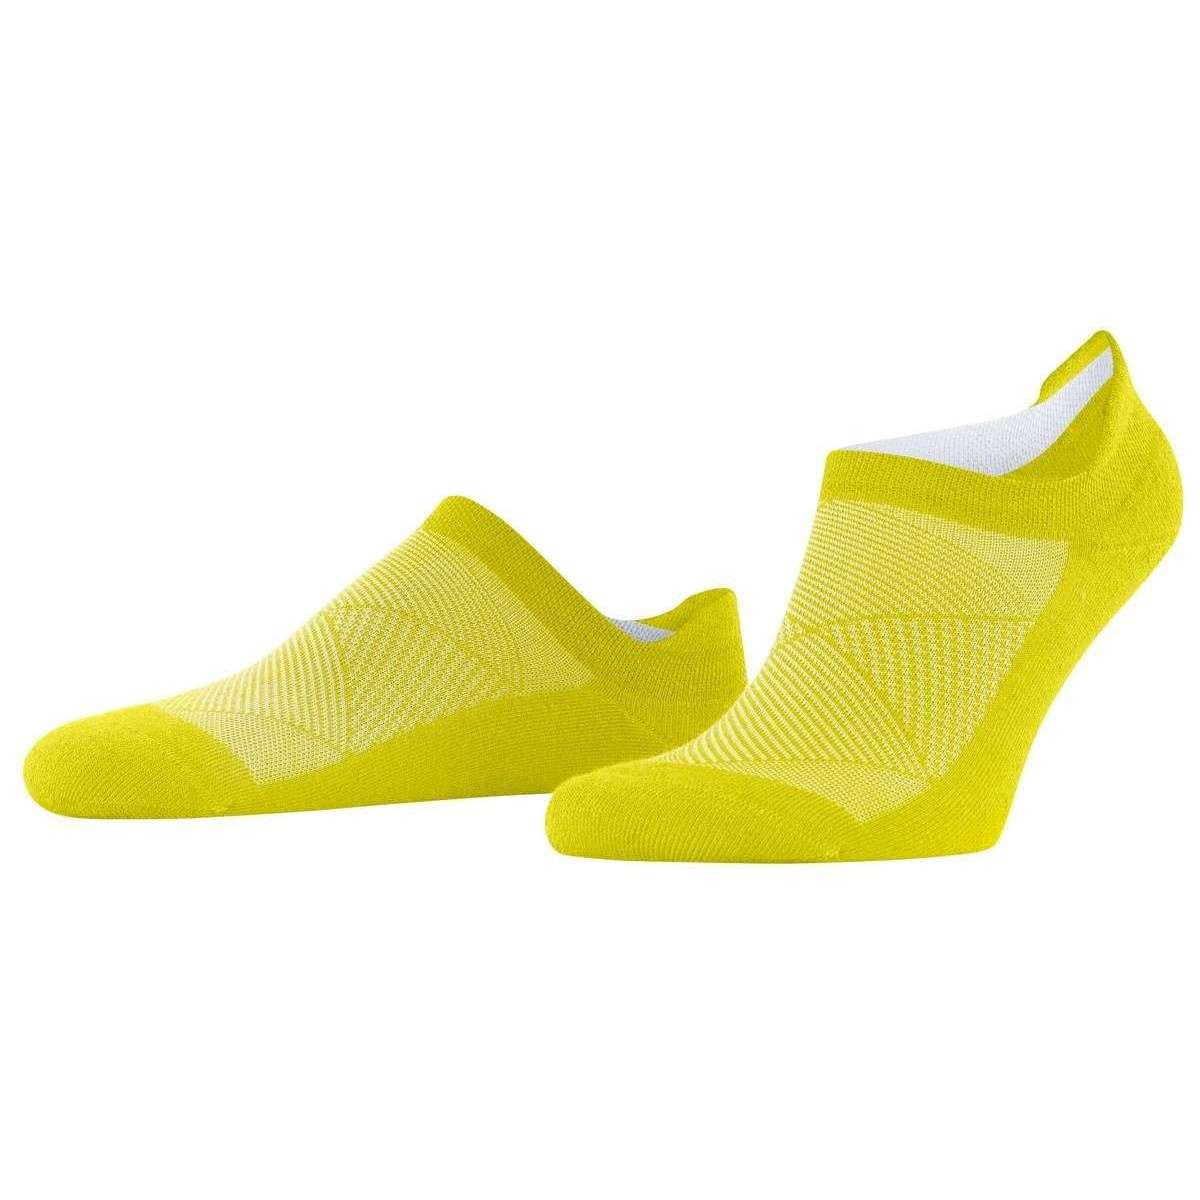 Burlington Athleisure Sneaker Socks - Sulfur Yellow